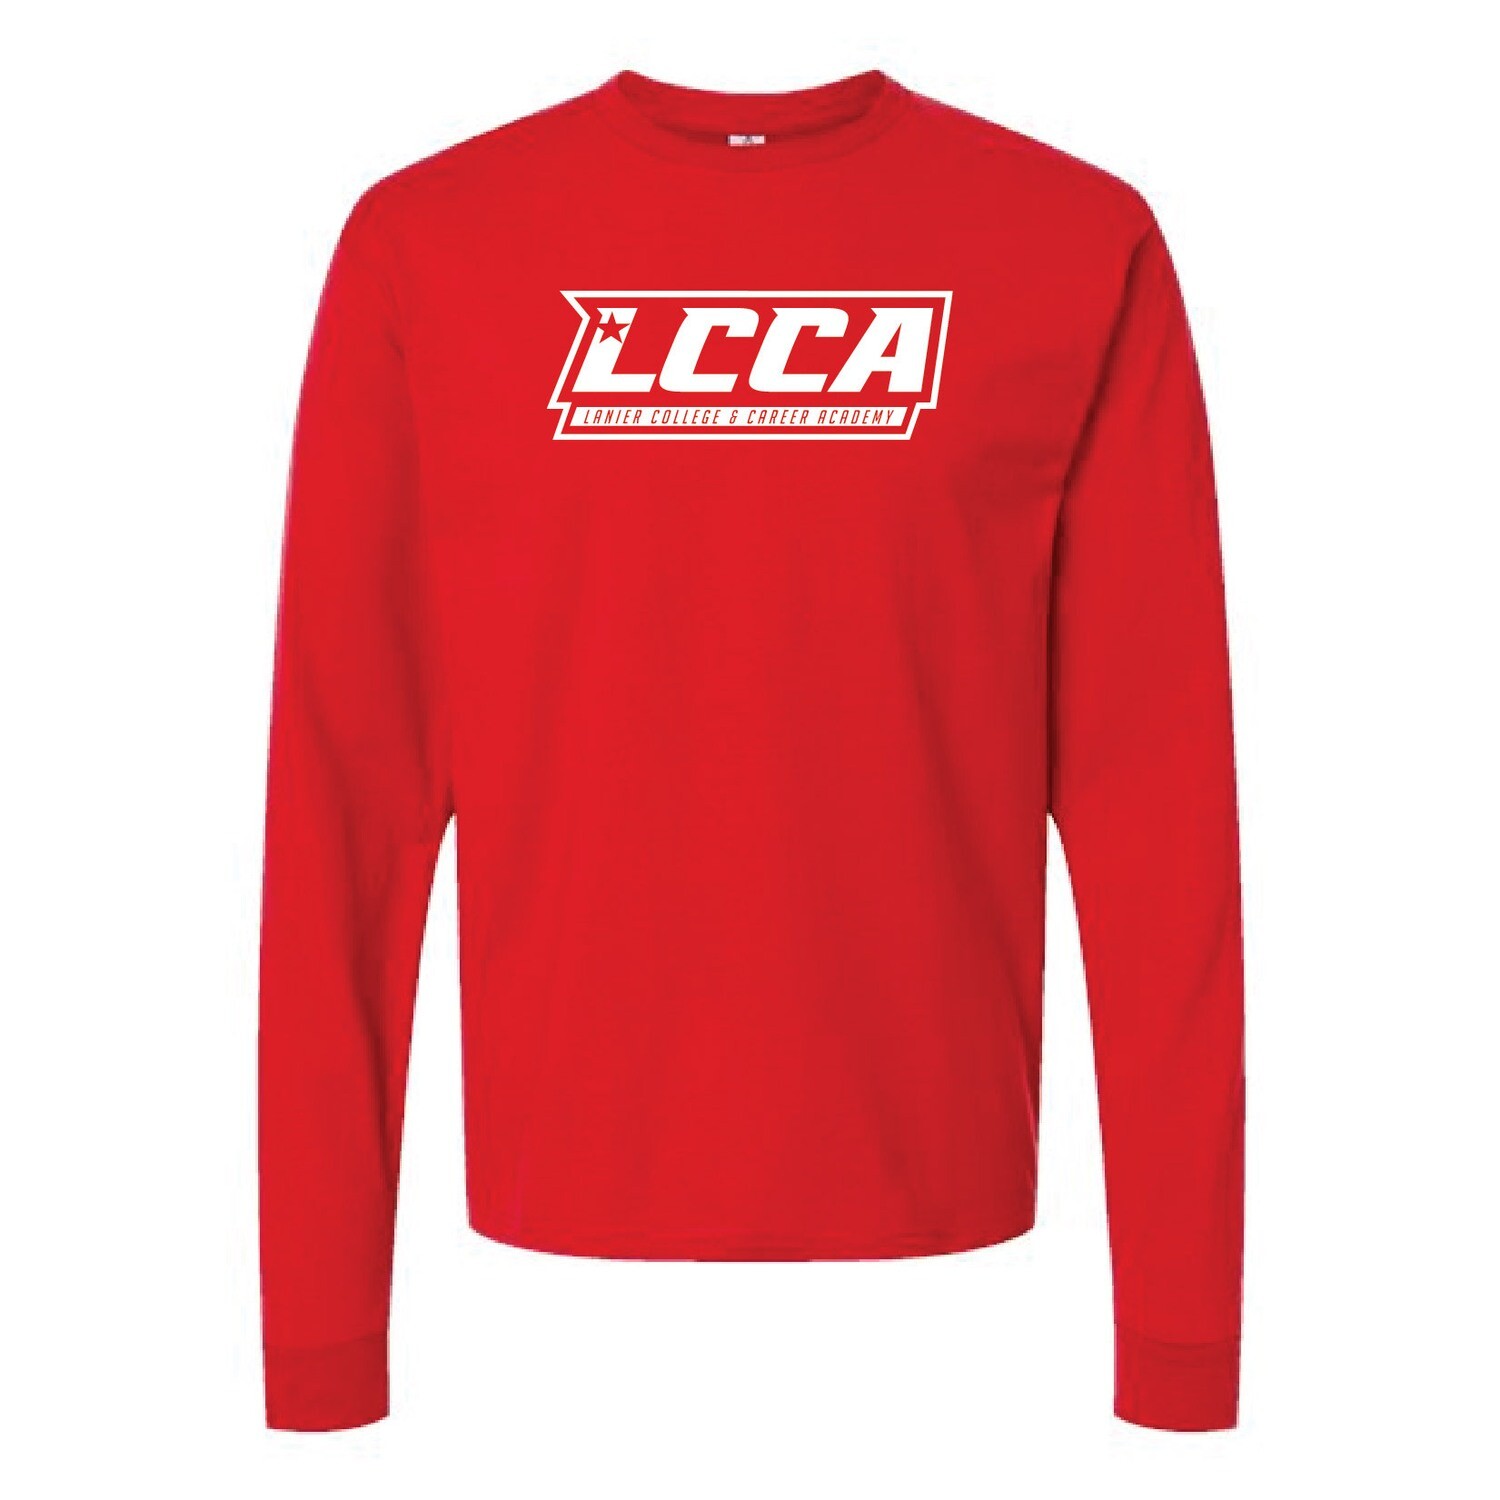 LCCA/Foundry Long Sleeve